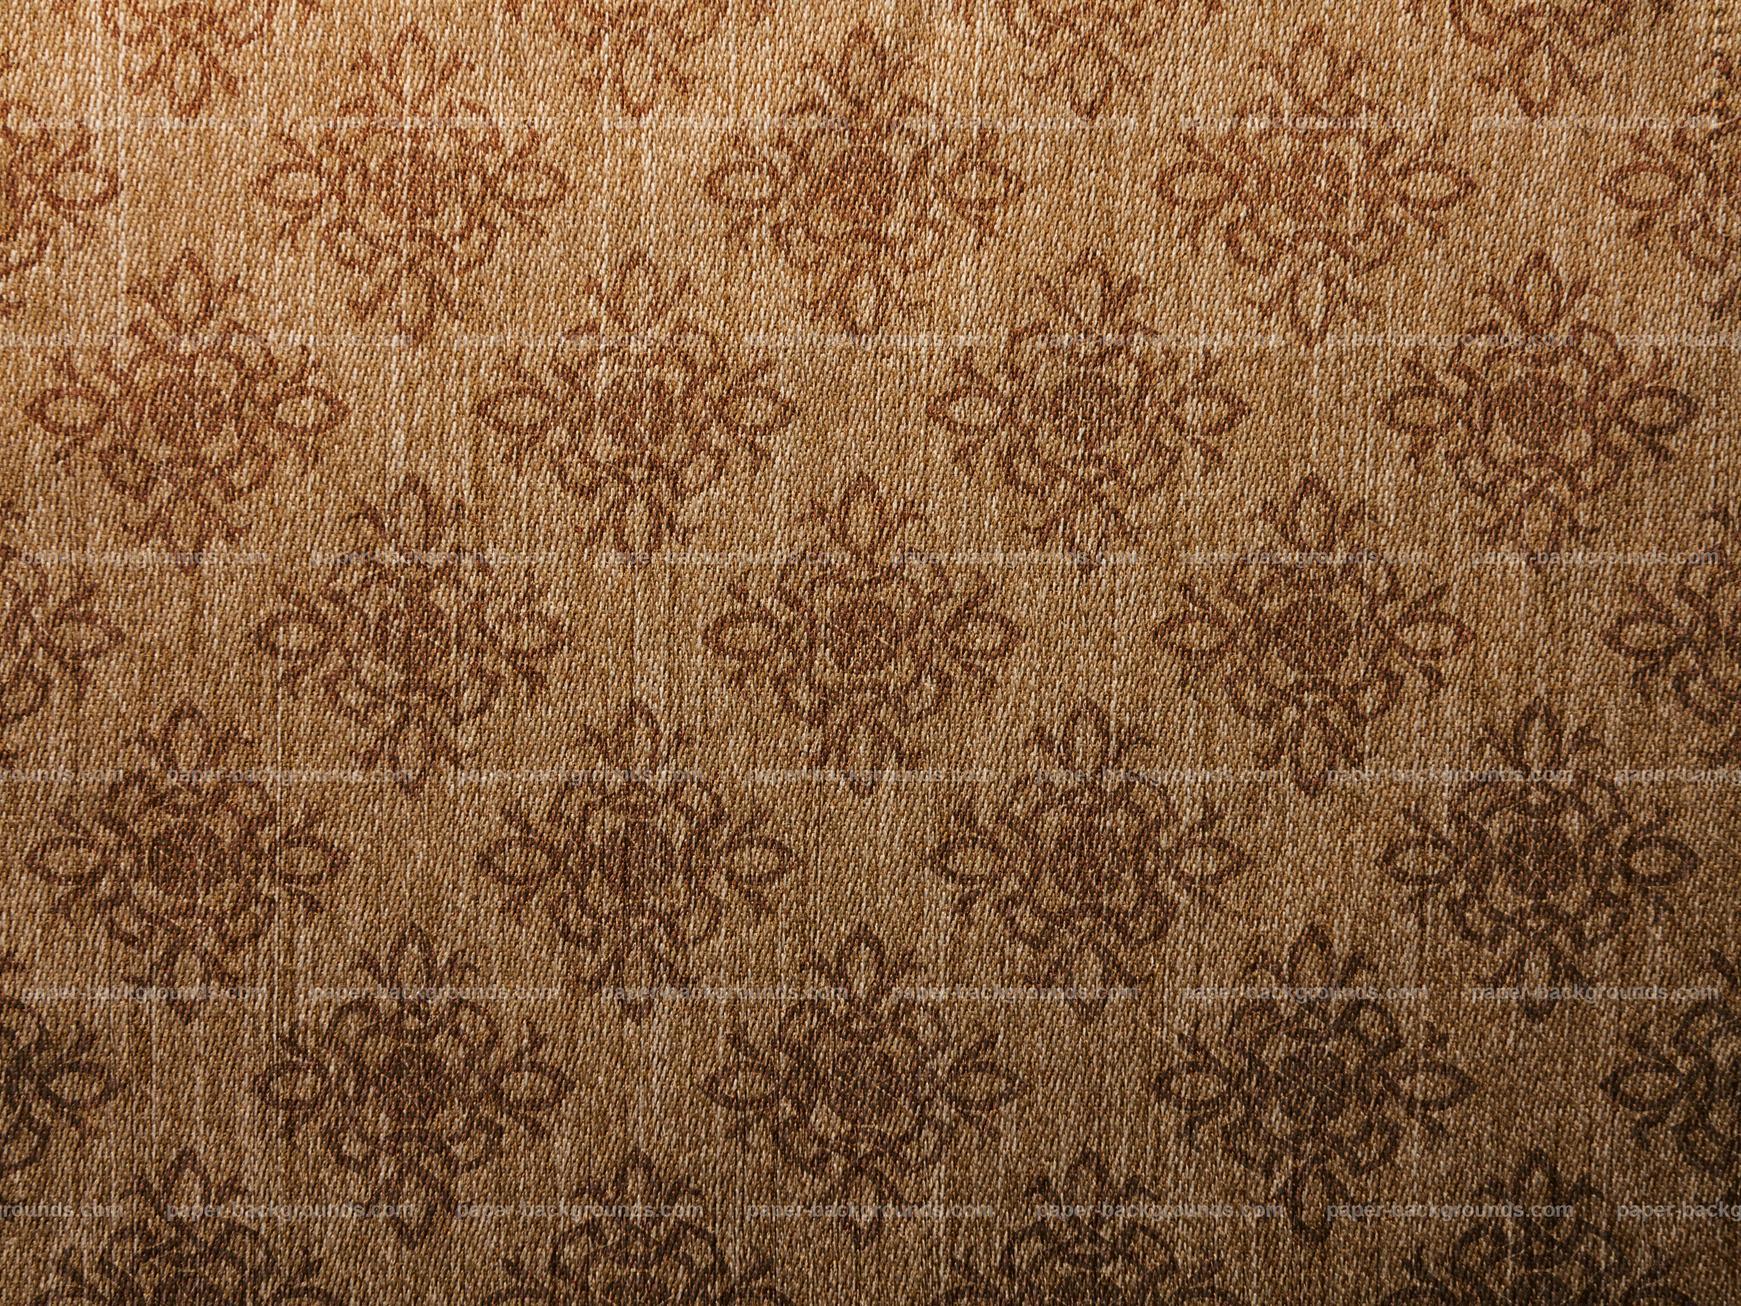 Damask Vintage Brown Canvas Texture Background